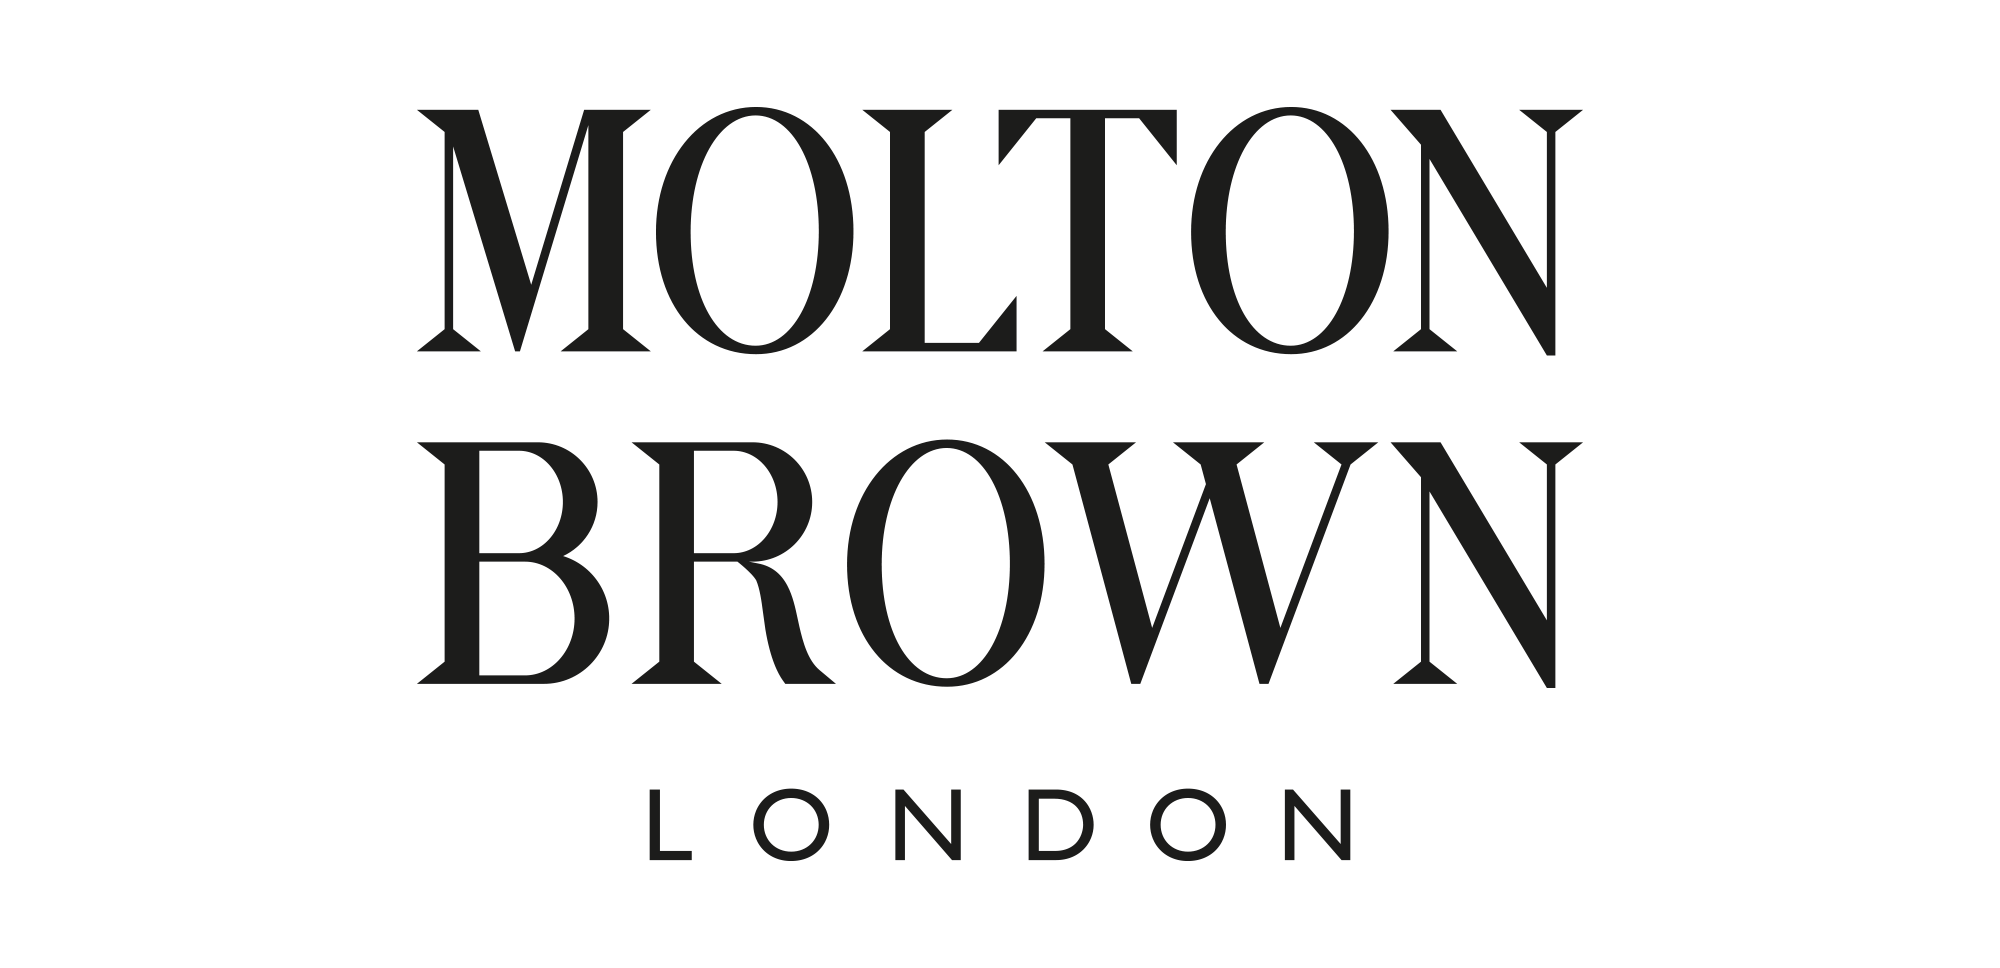 Molton Brown – Vetiver & Grapefruit – Eau de Parfum - Danae Profumeria